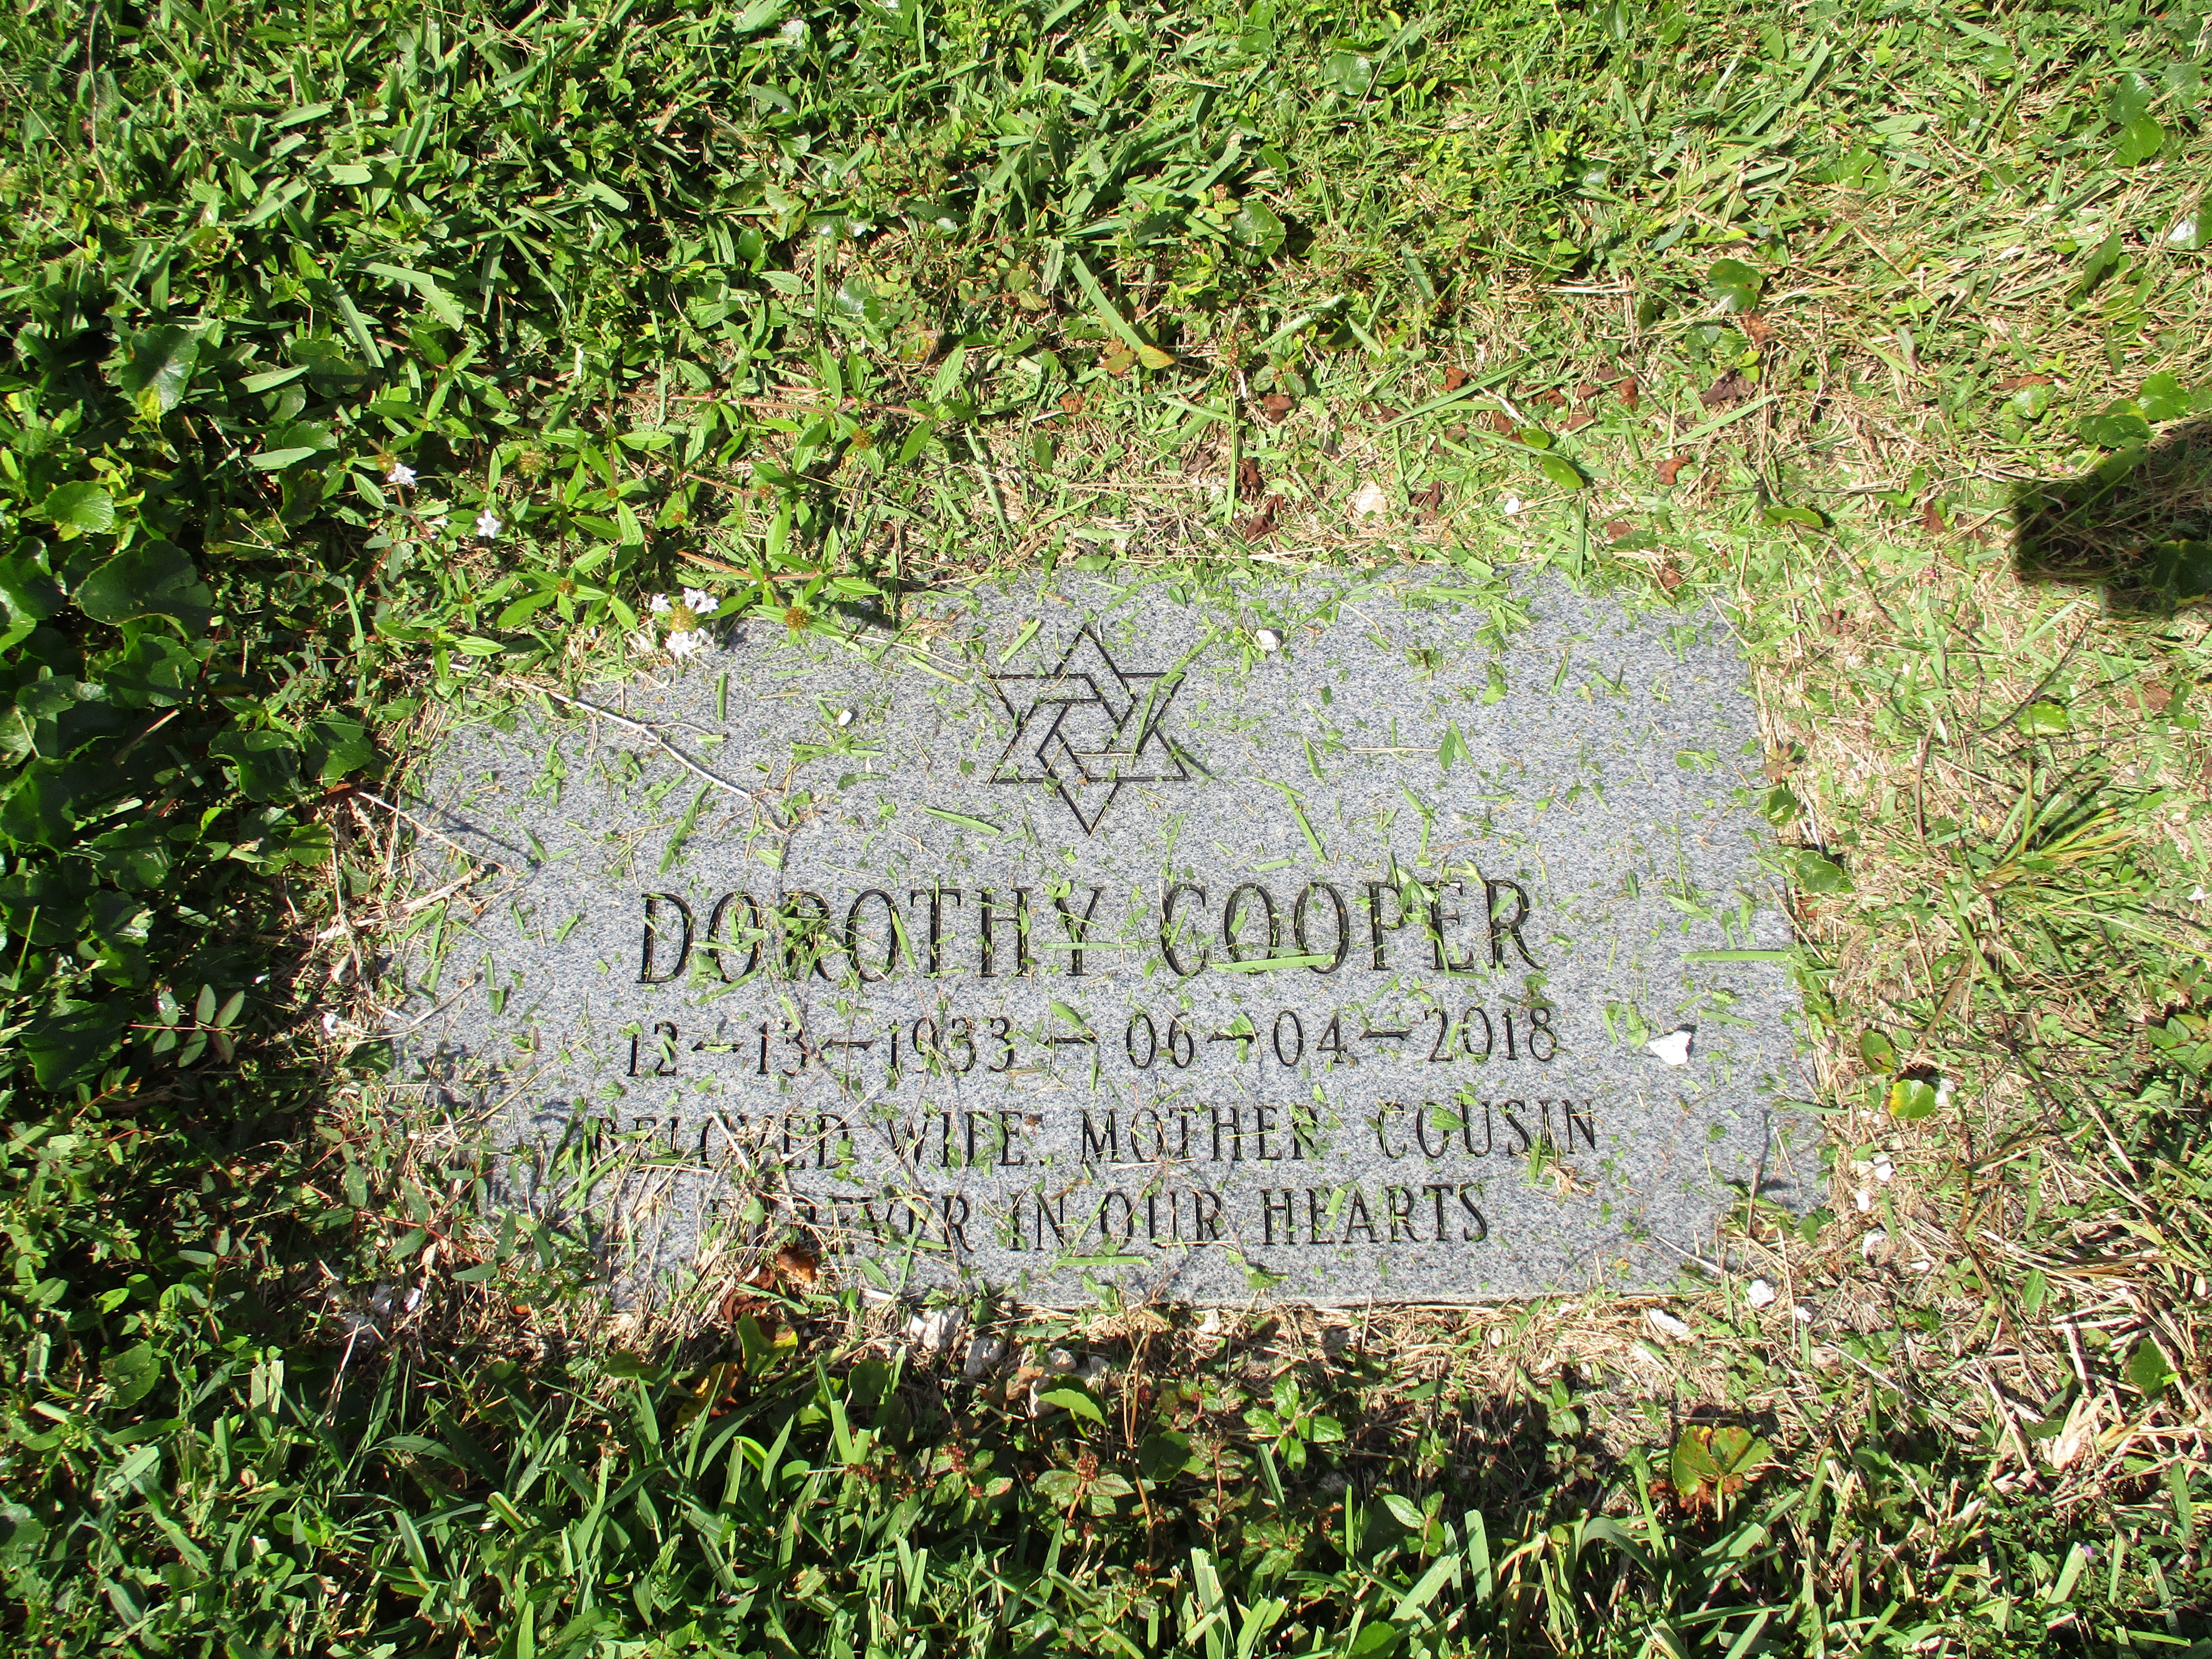 Dorothy Cooper